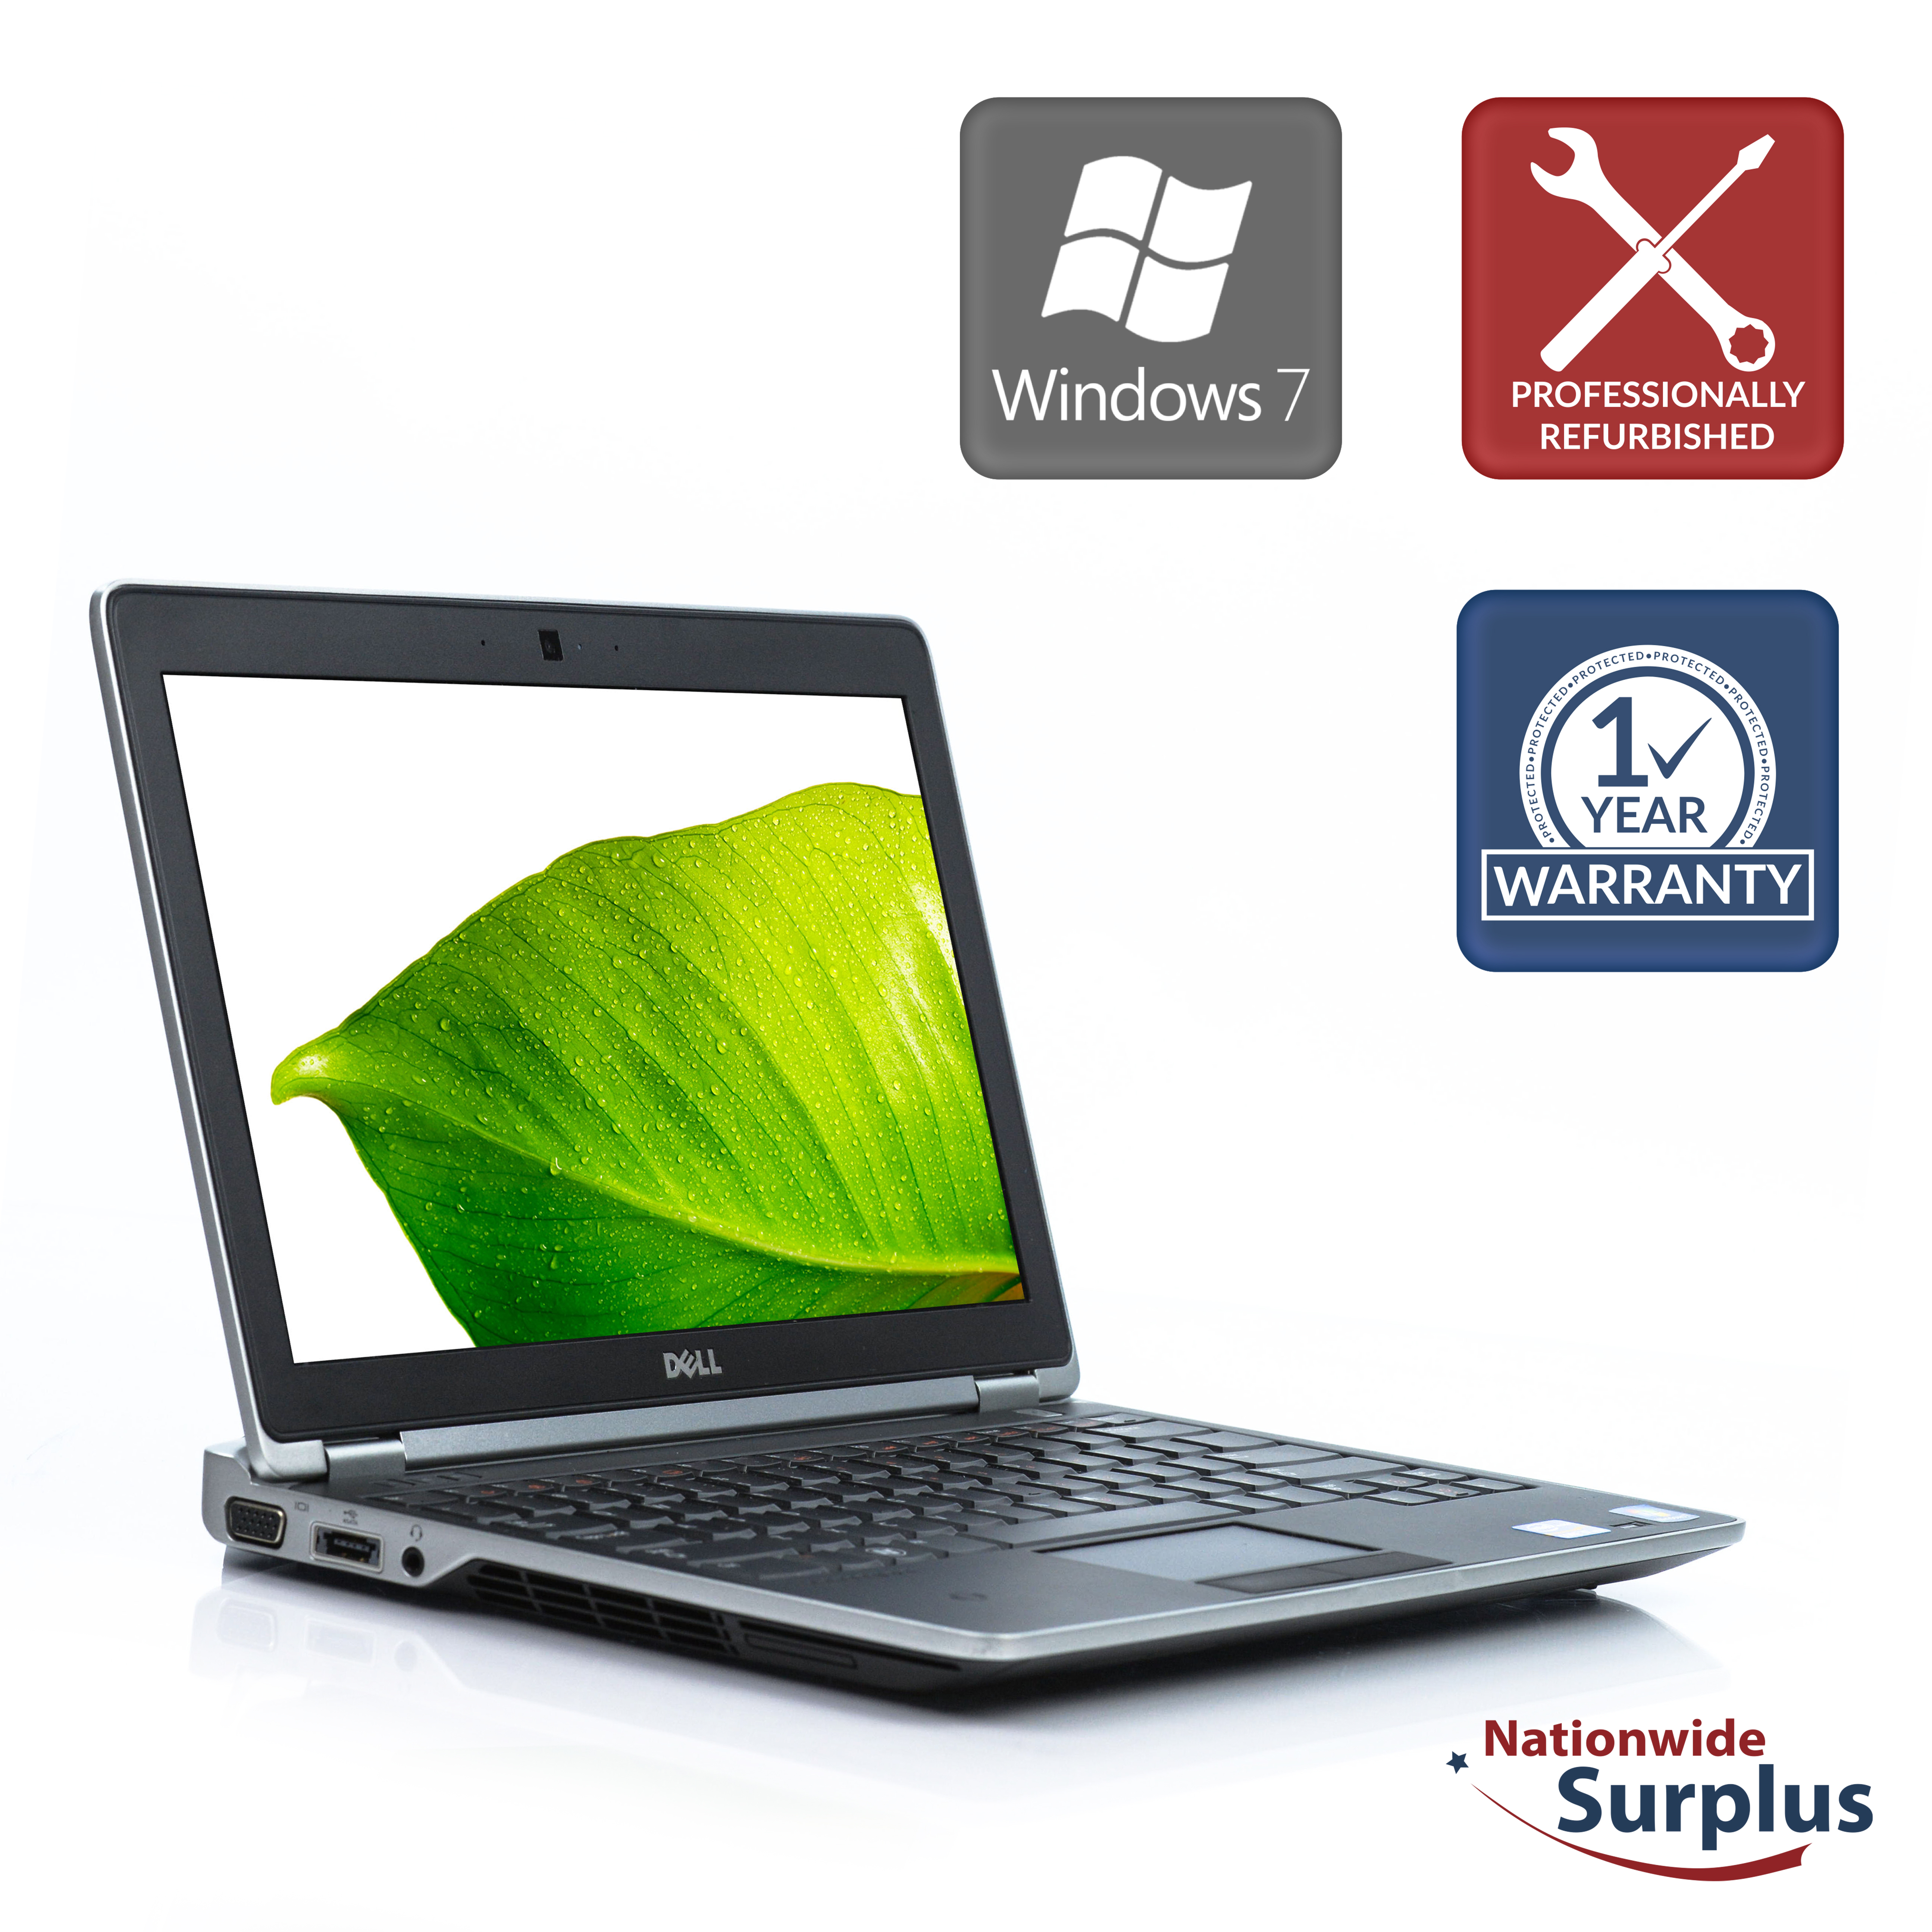 Dell Latitude E6220 Laptop  i7-2640M 4GB 320GB Win 7 Pro 1 Yr Wty B v.AAW